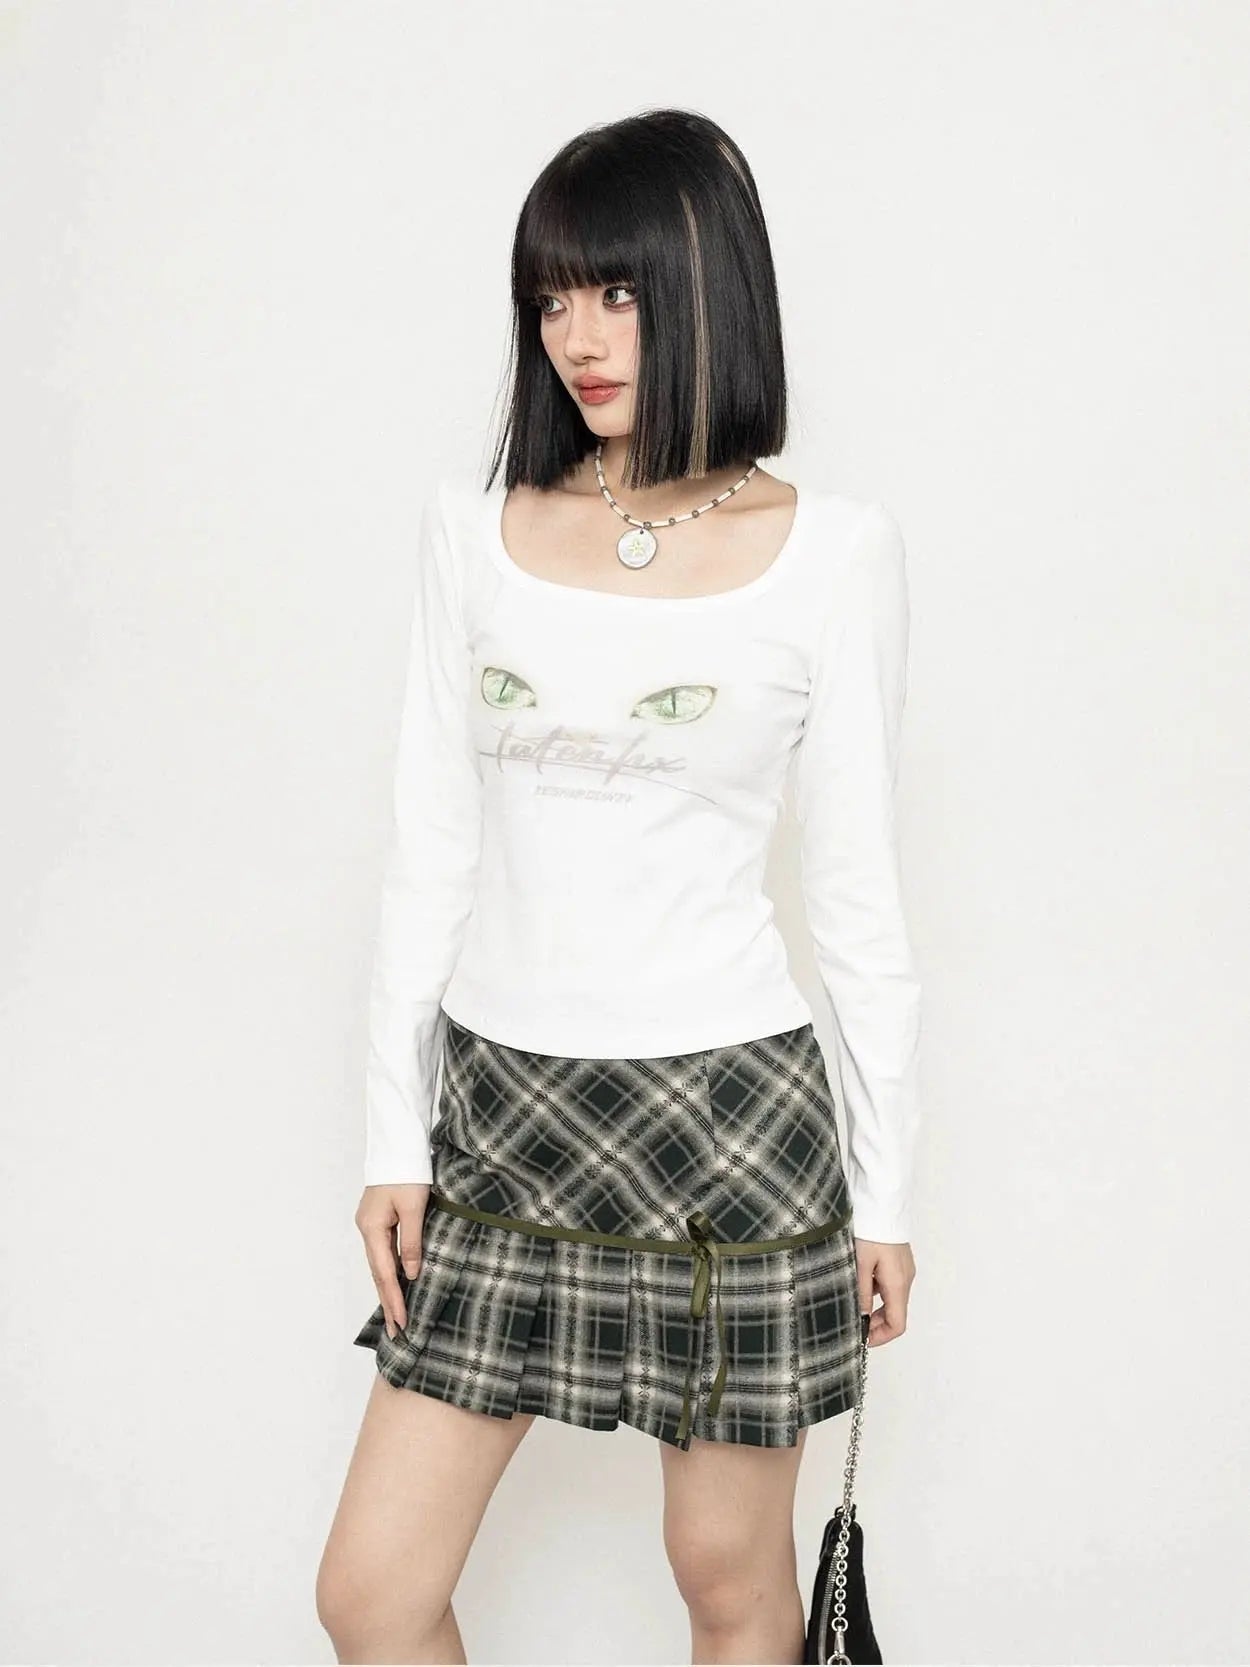 'Cat Eye' Anime Girl Square Neck Long Sleeves Shirts AlielNosirrah